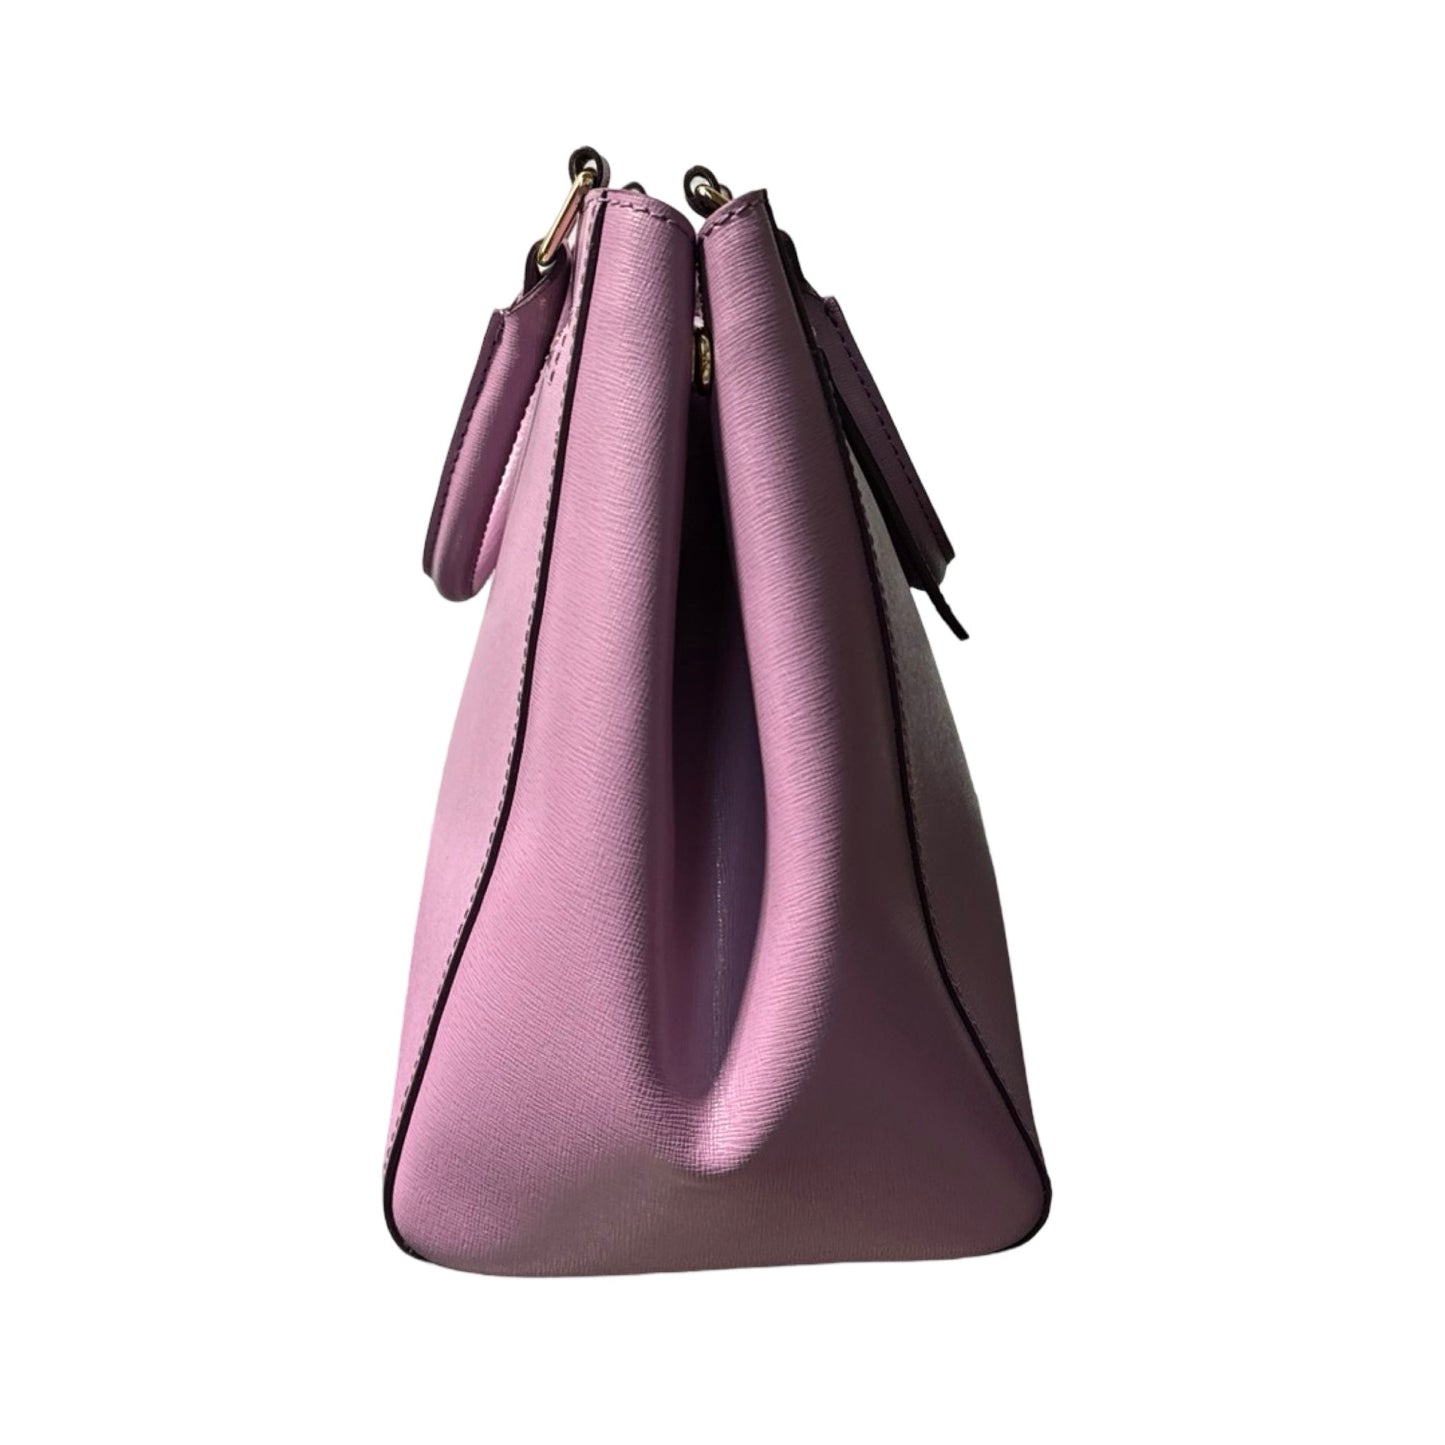 Purple Handbag Designer Dooney And Bourke, Size Medium